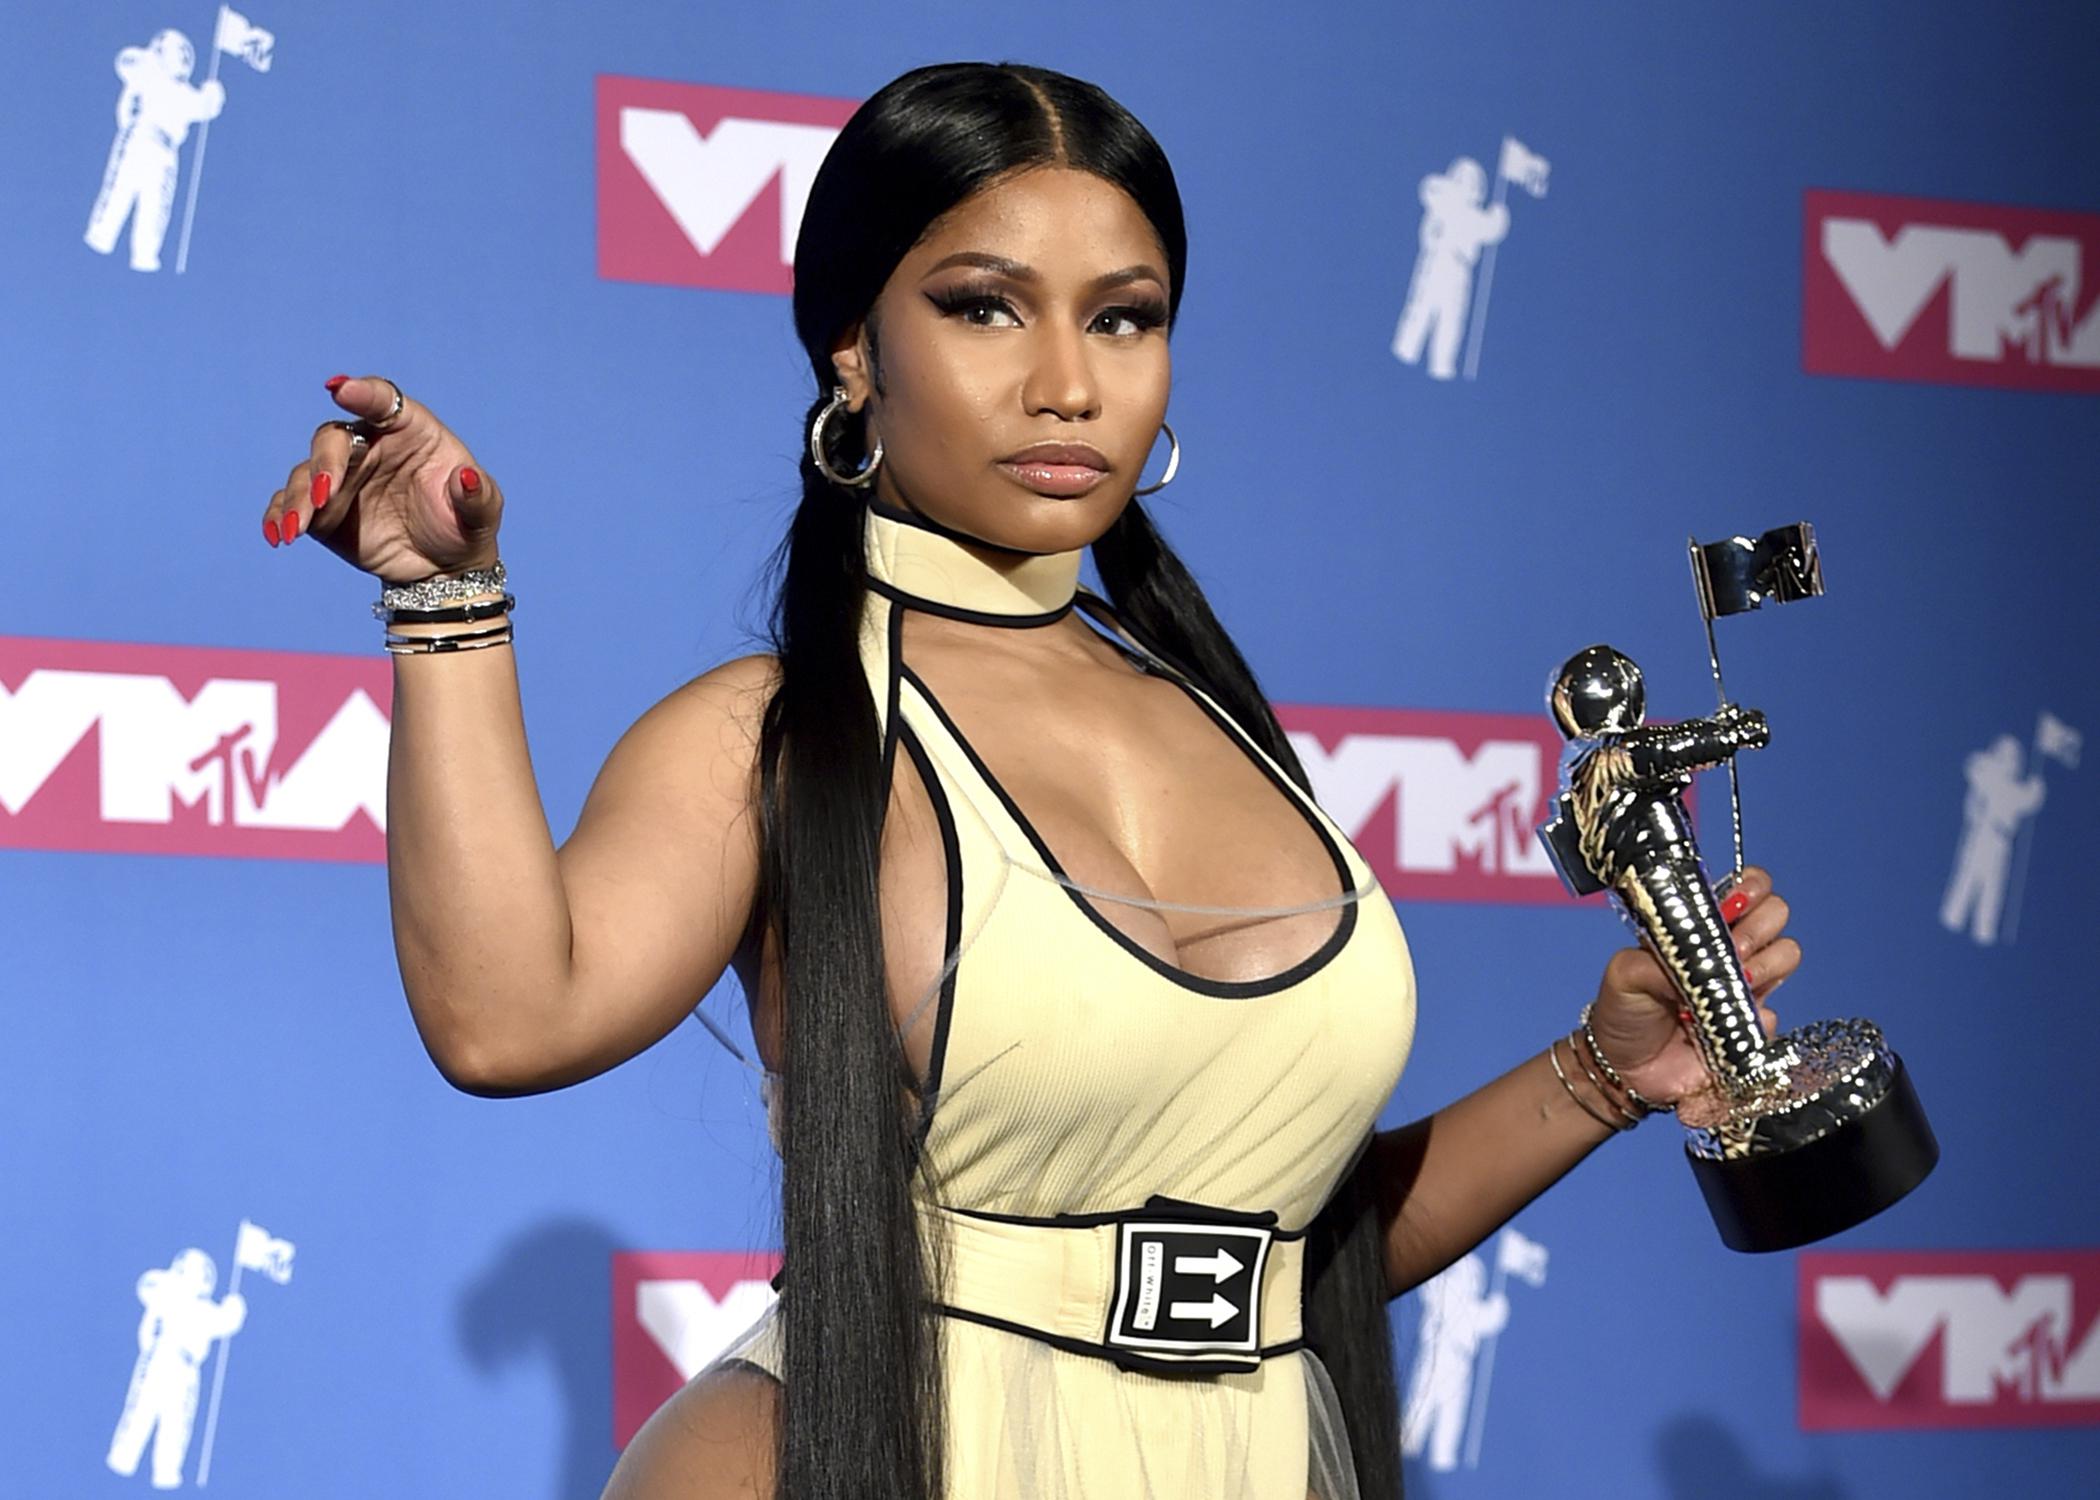 Nicki Minaj to get Video Vanguard Award at MTV Awards | AP News